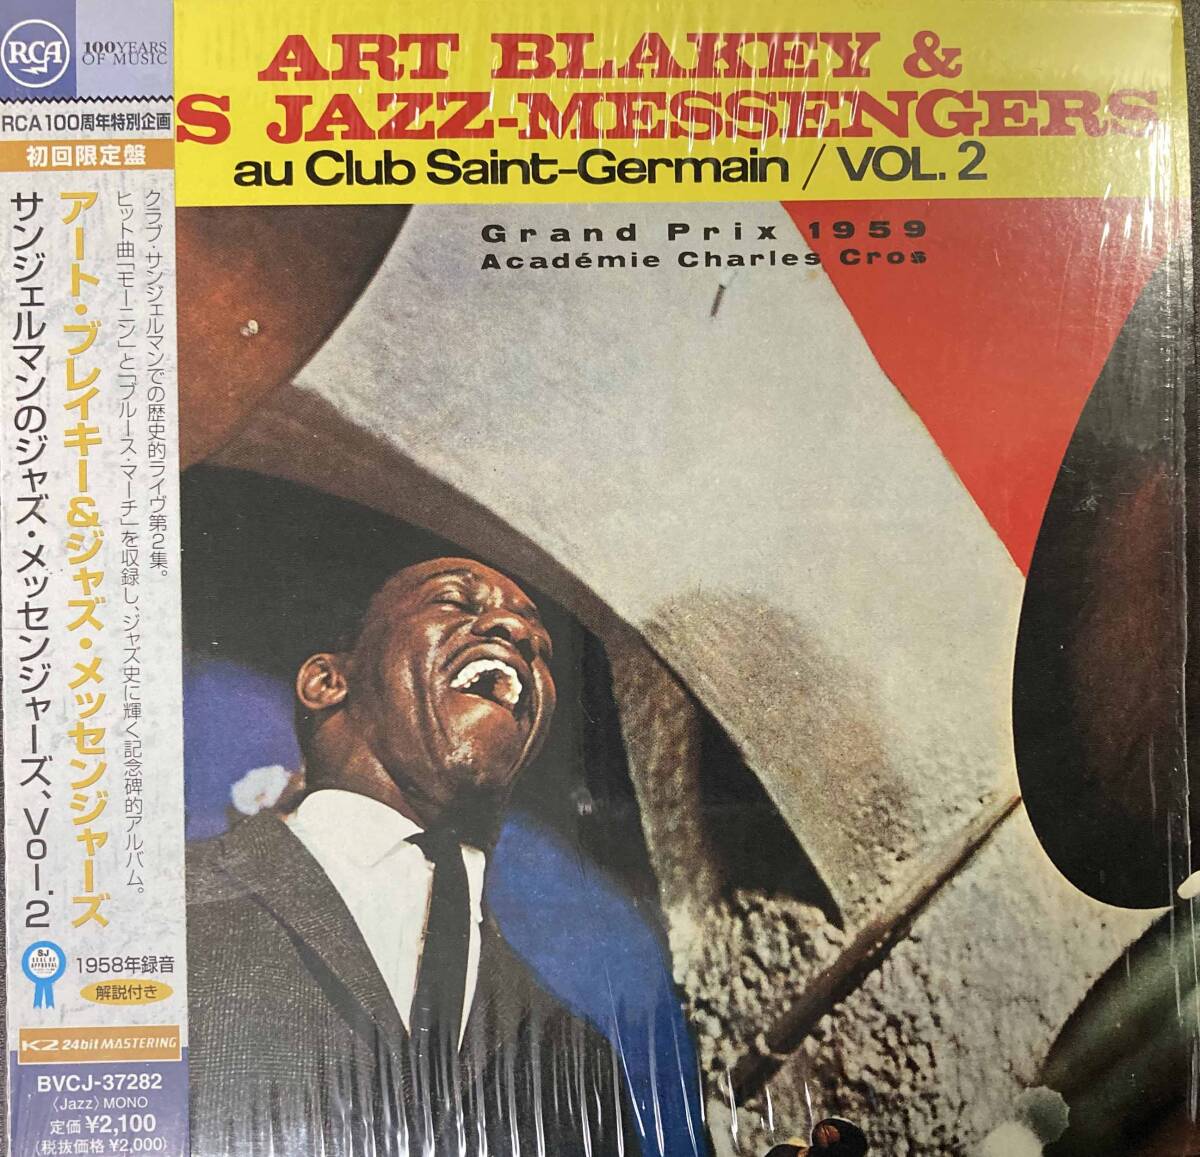 Art Blakey & The Jazz Messengers / Au Club Saint-Germain Vol.1,2,3 中古3CD 紙ジャケ 国内盤 帯付き 24bitリマスタリング 限定盤の画像3